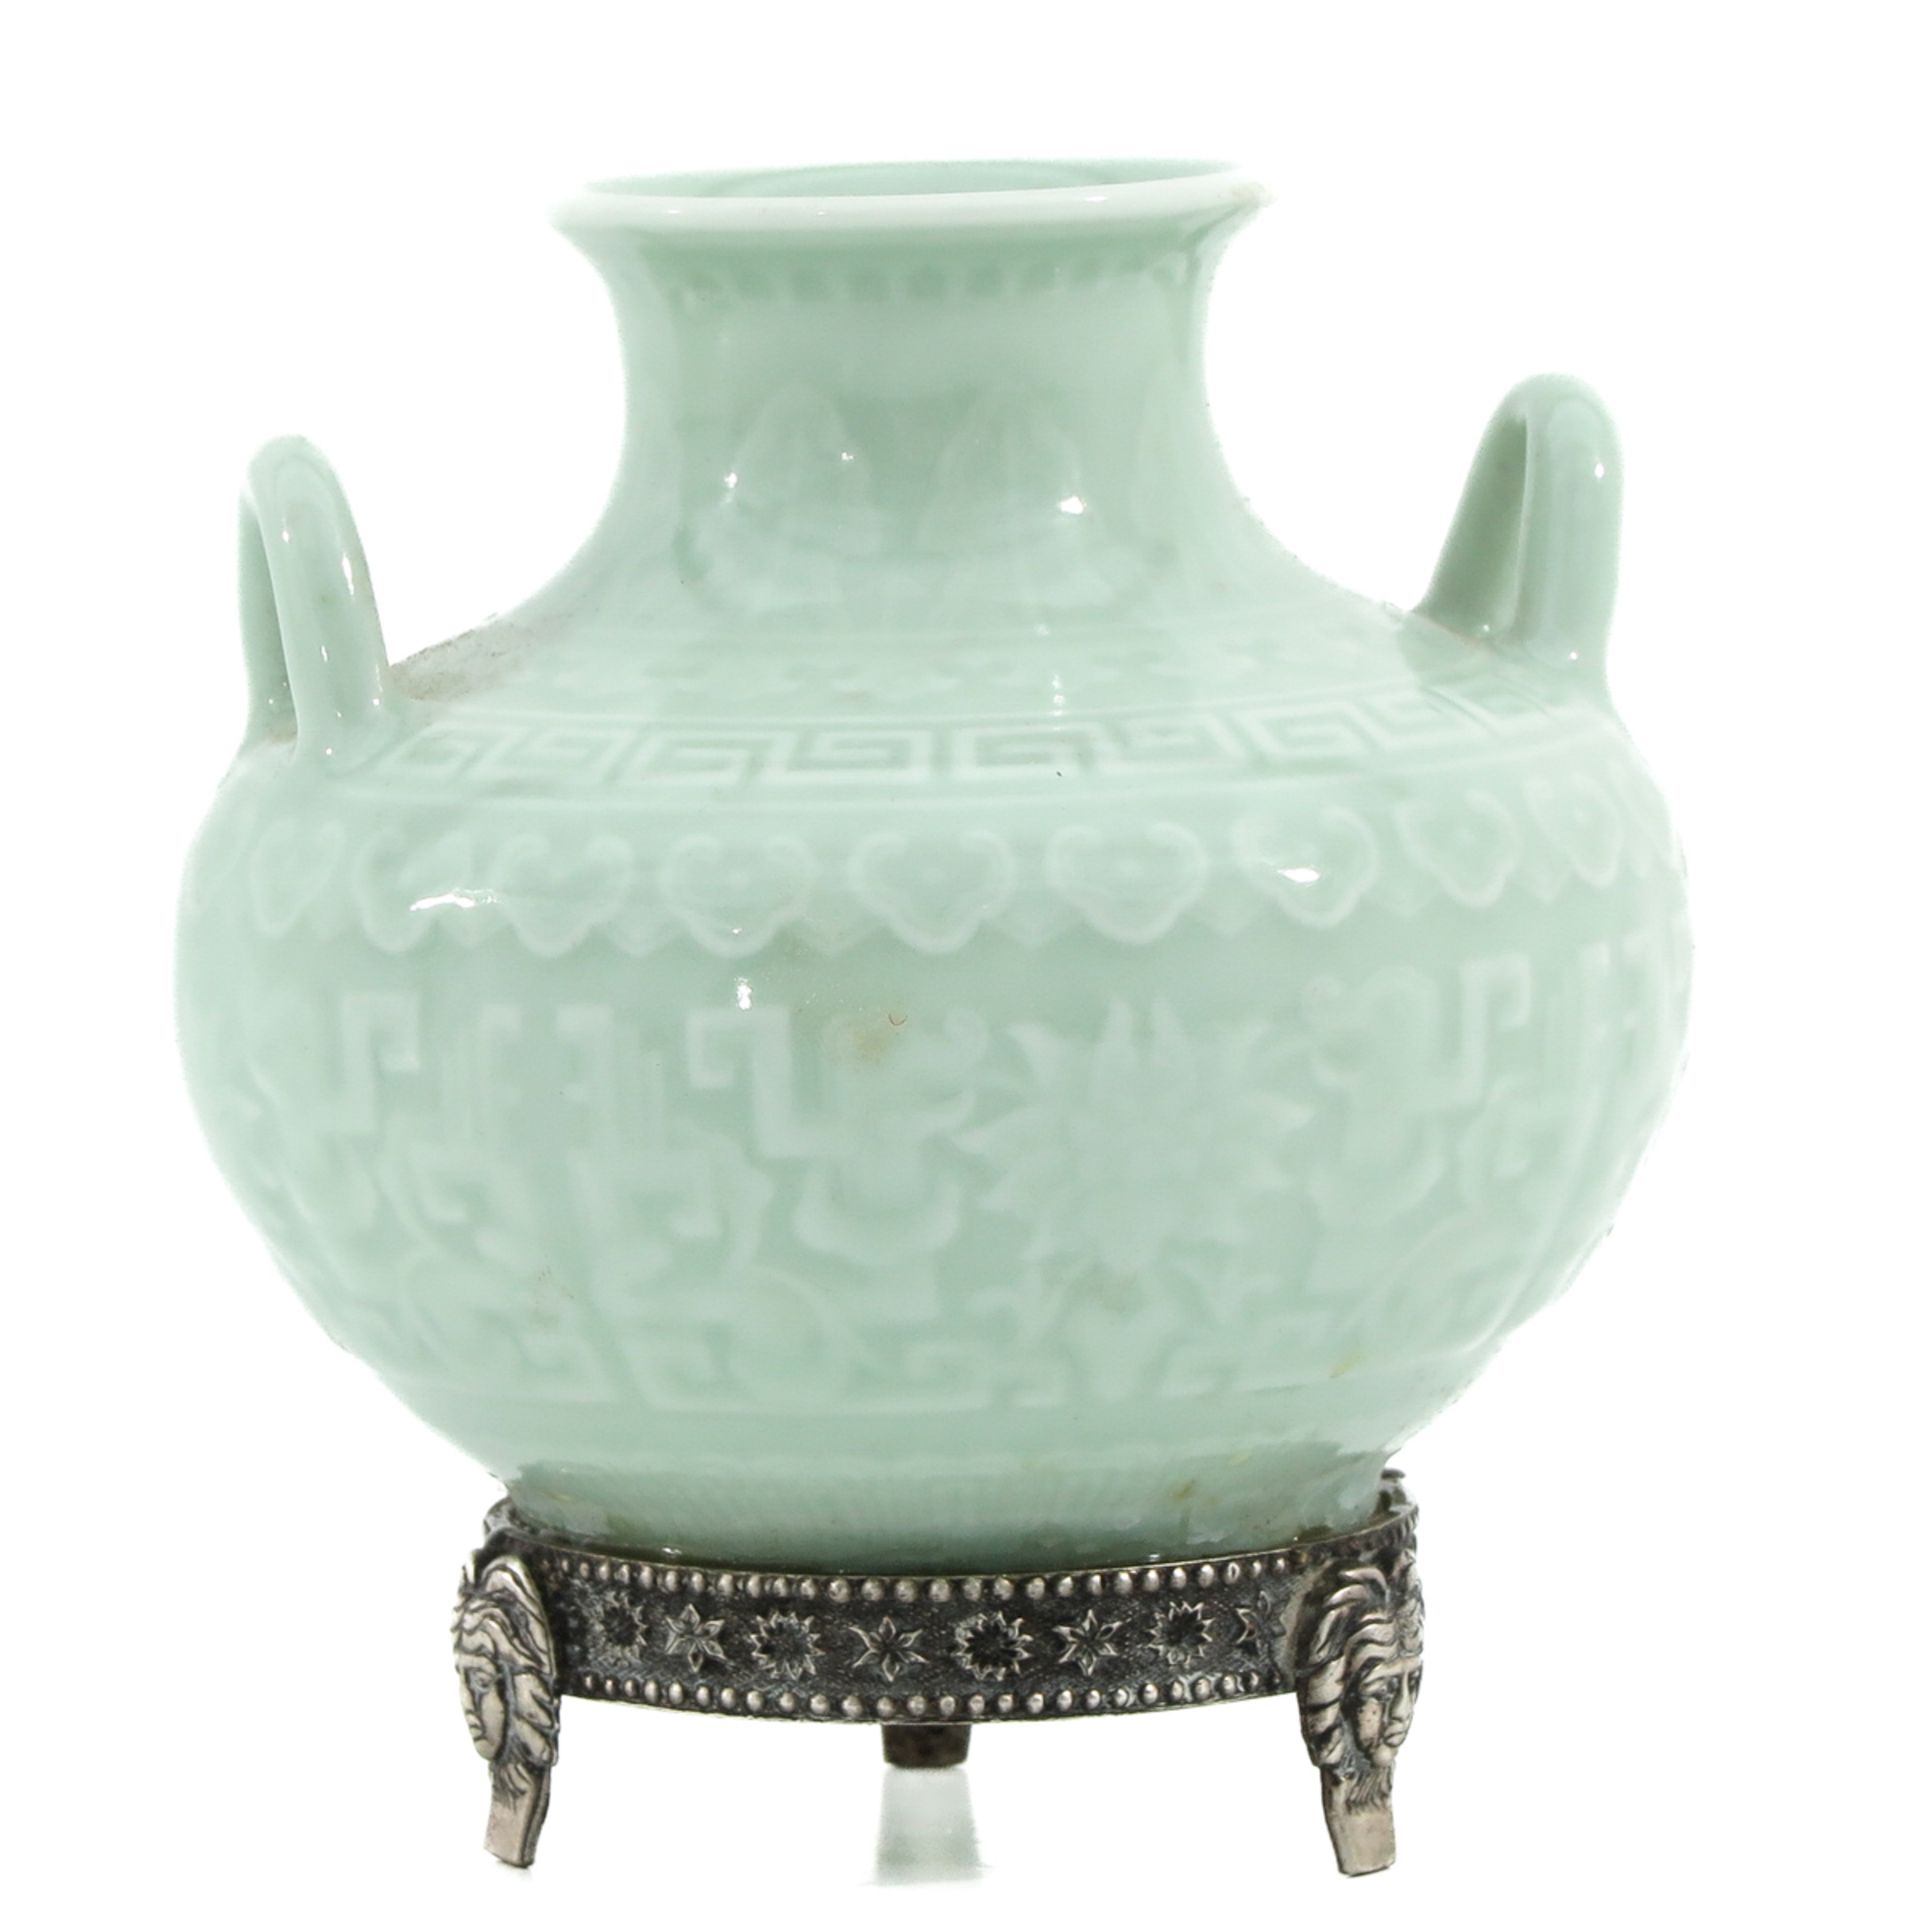 A Small Celadon Vase